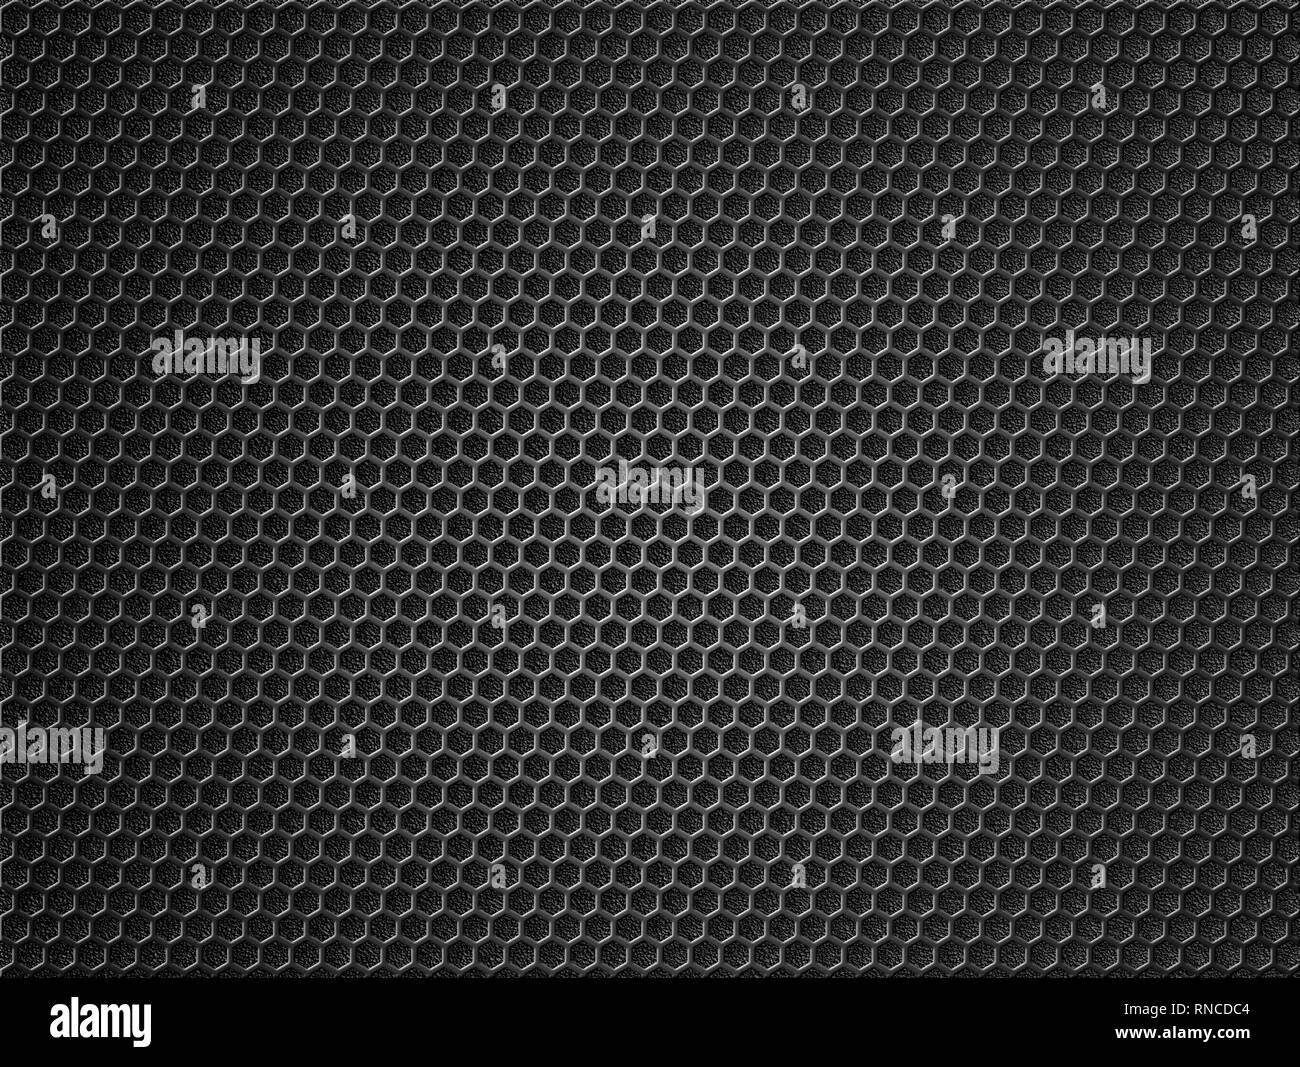 Black metal grid background 3d illustration Stock Photo